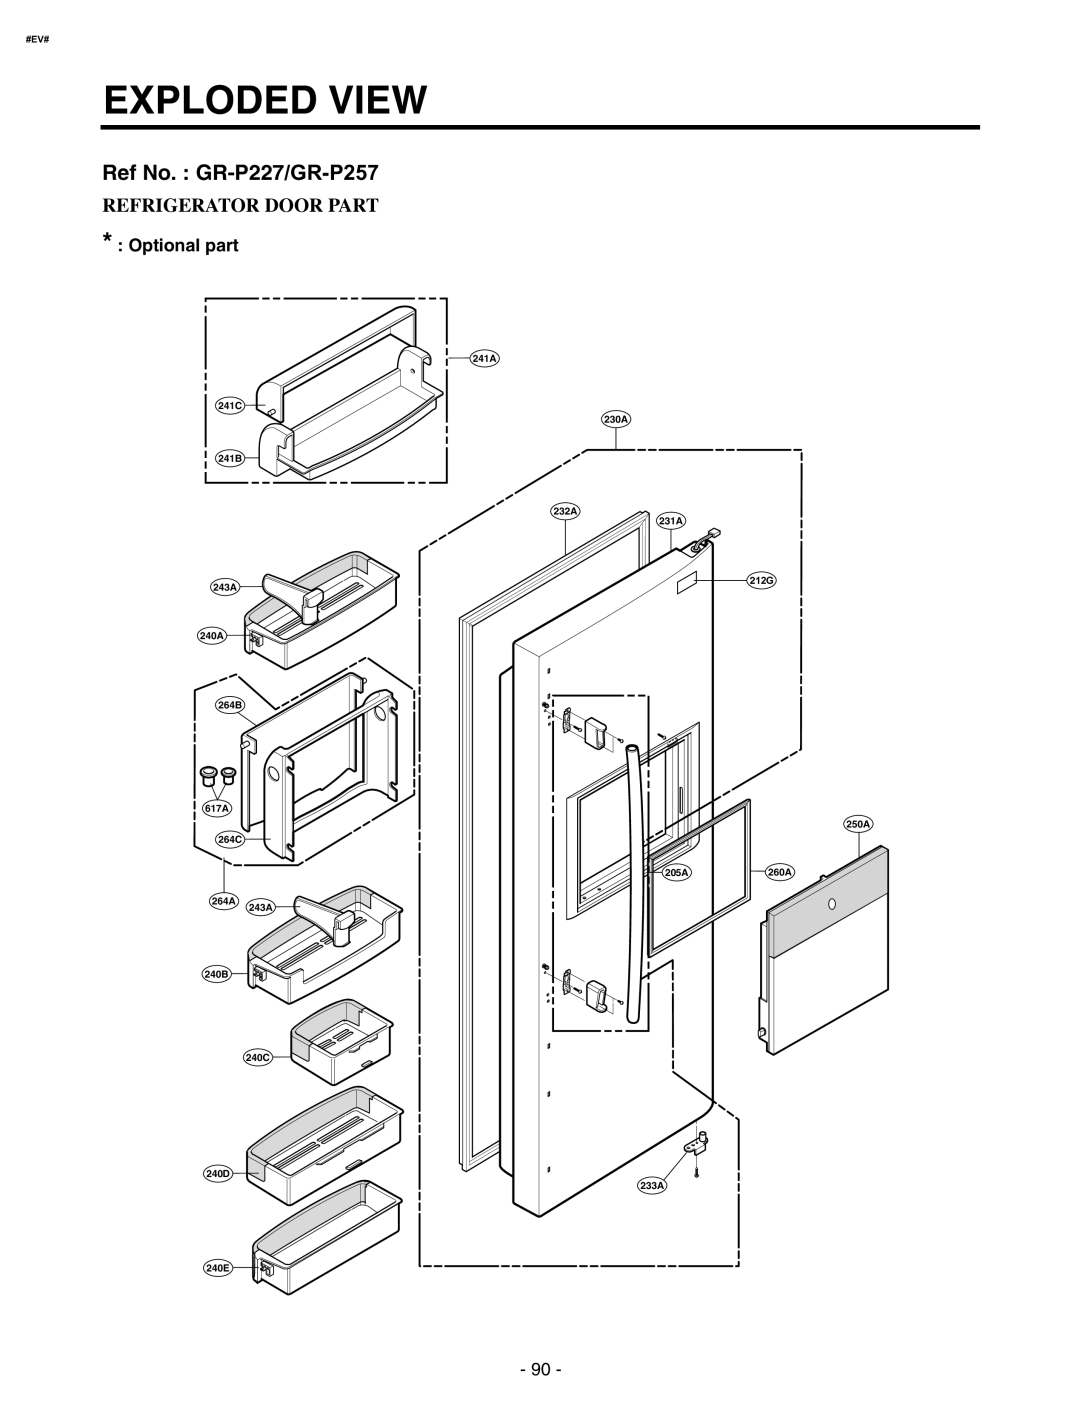 LG Electronics GR-P227/L227 Ref No. GR-P227/GR-P257, Refrigerator Door Part, Optional part, Exploded View, #Ev#, 212G 